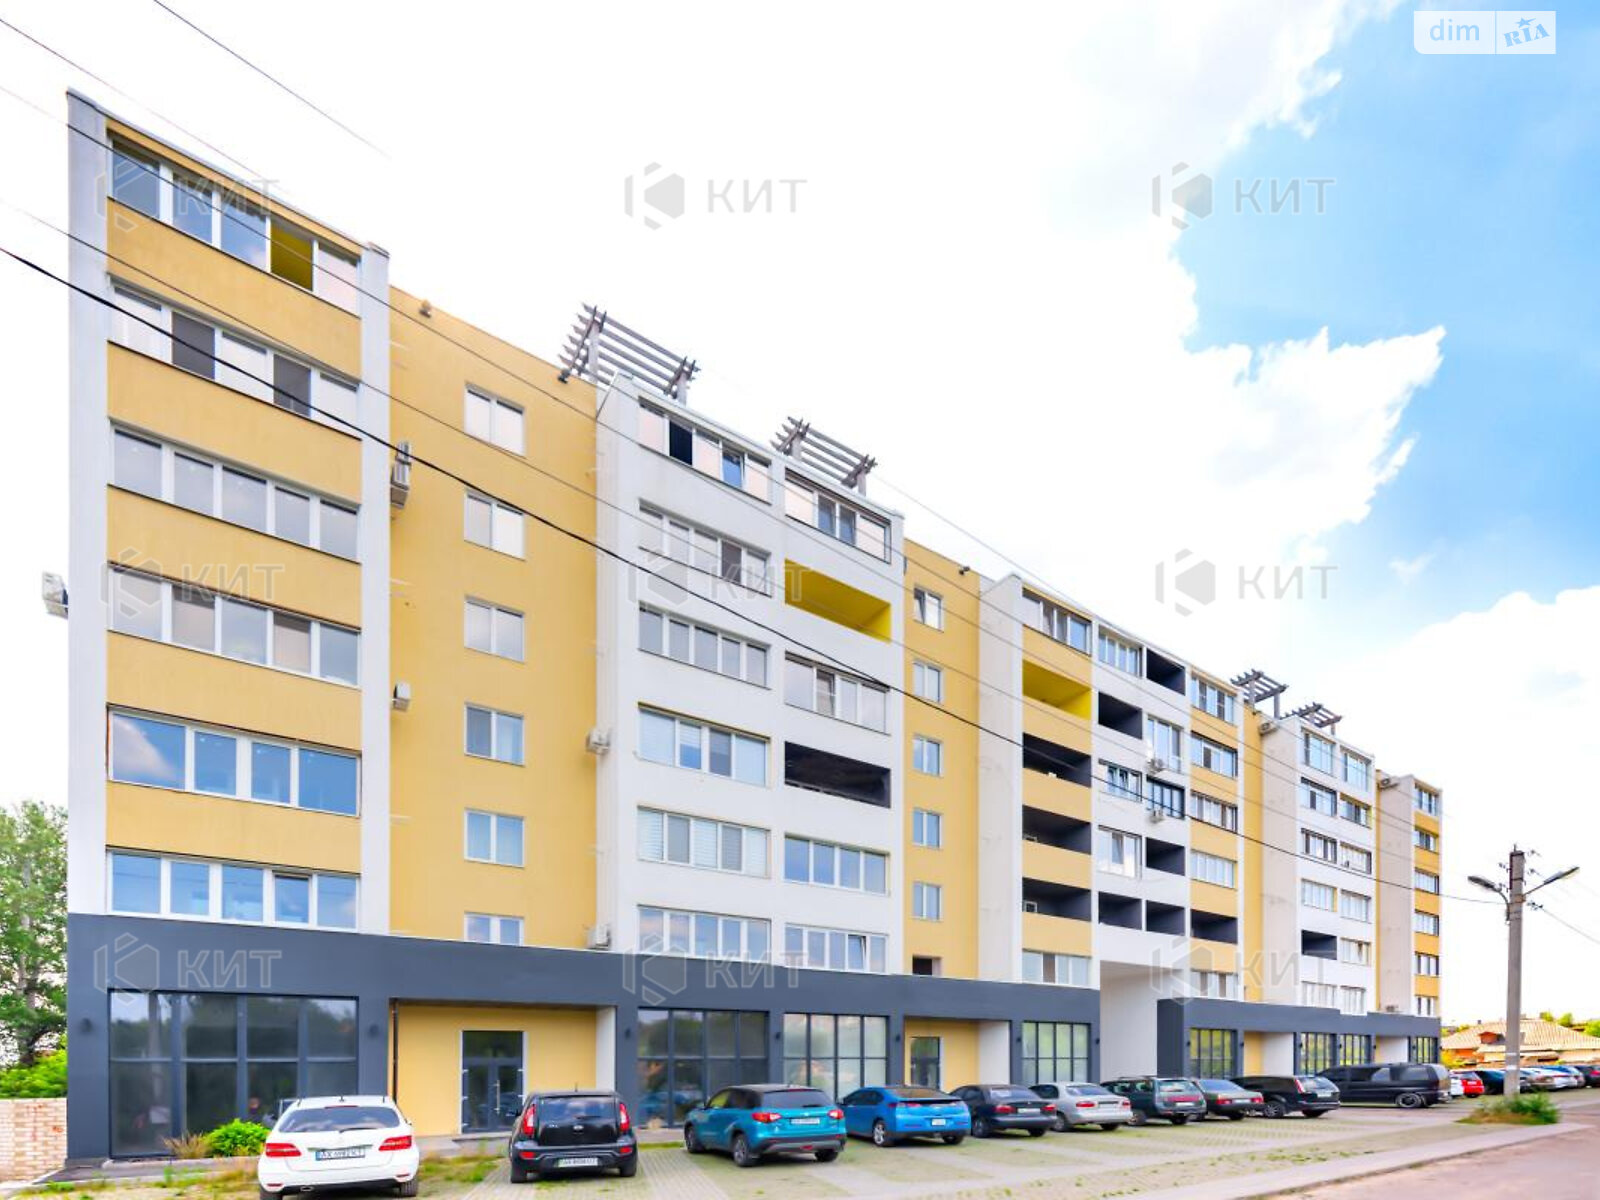 Продажа трехкомнатной квартиры в Харькове, на ул. Франковская 10, район Центр фото 1